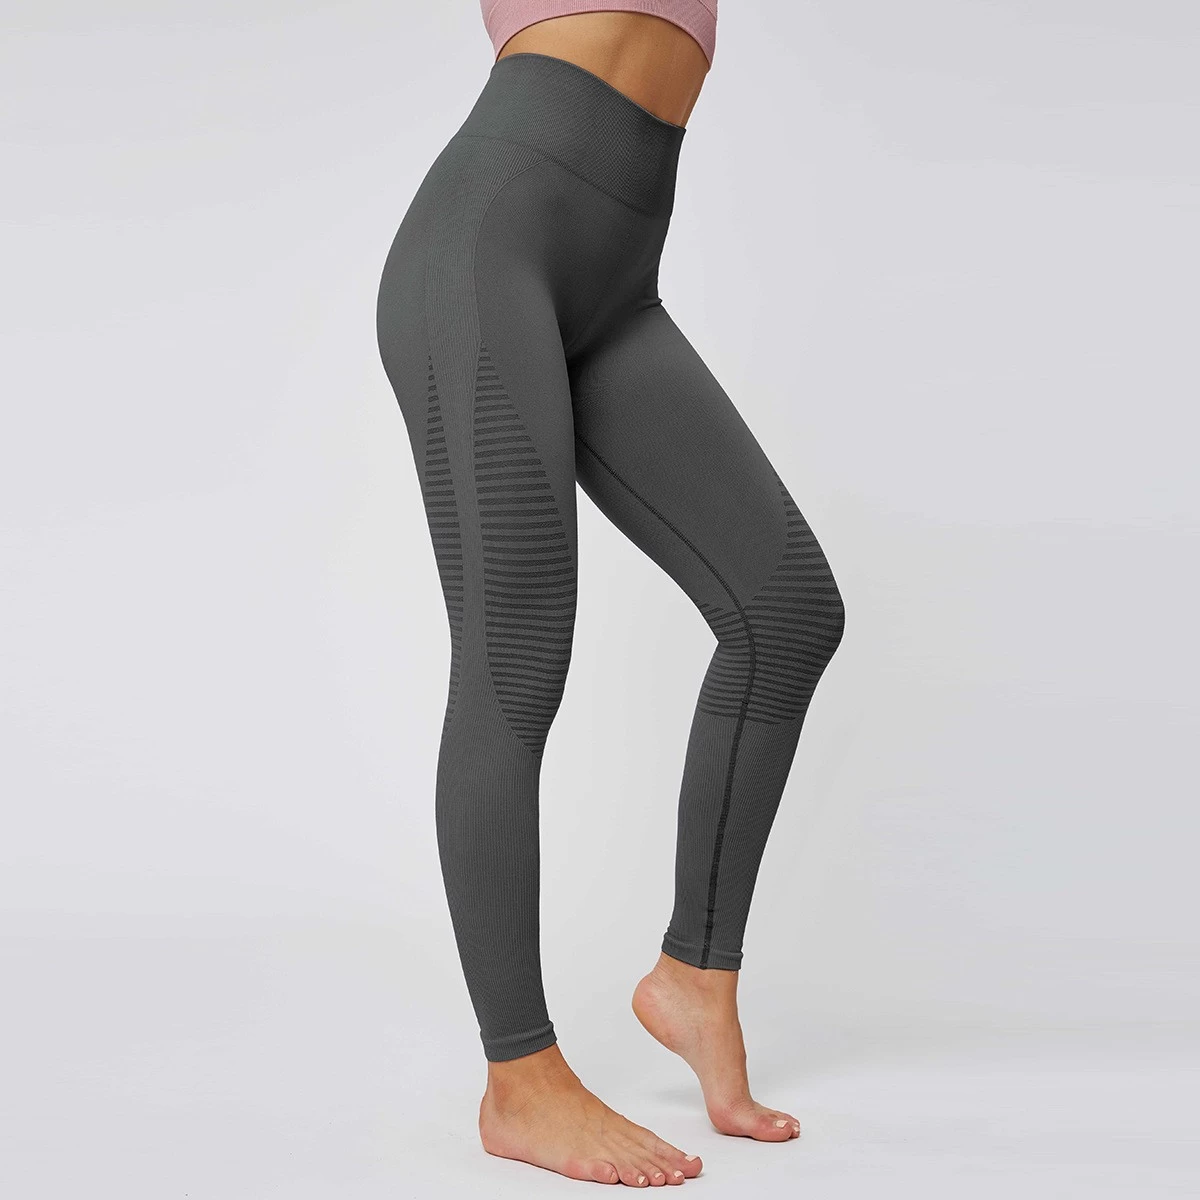 S-SHAPER Women Seamless Leggings High-quality Fabrics High Waist Quick drying Workout Gym Yoga Pants Manufacturer